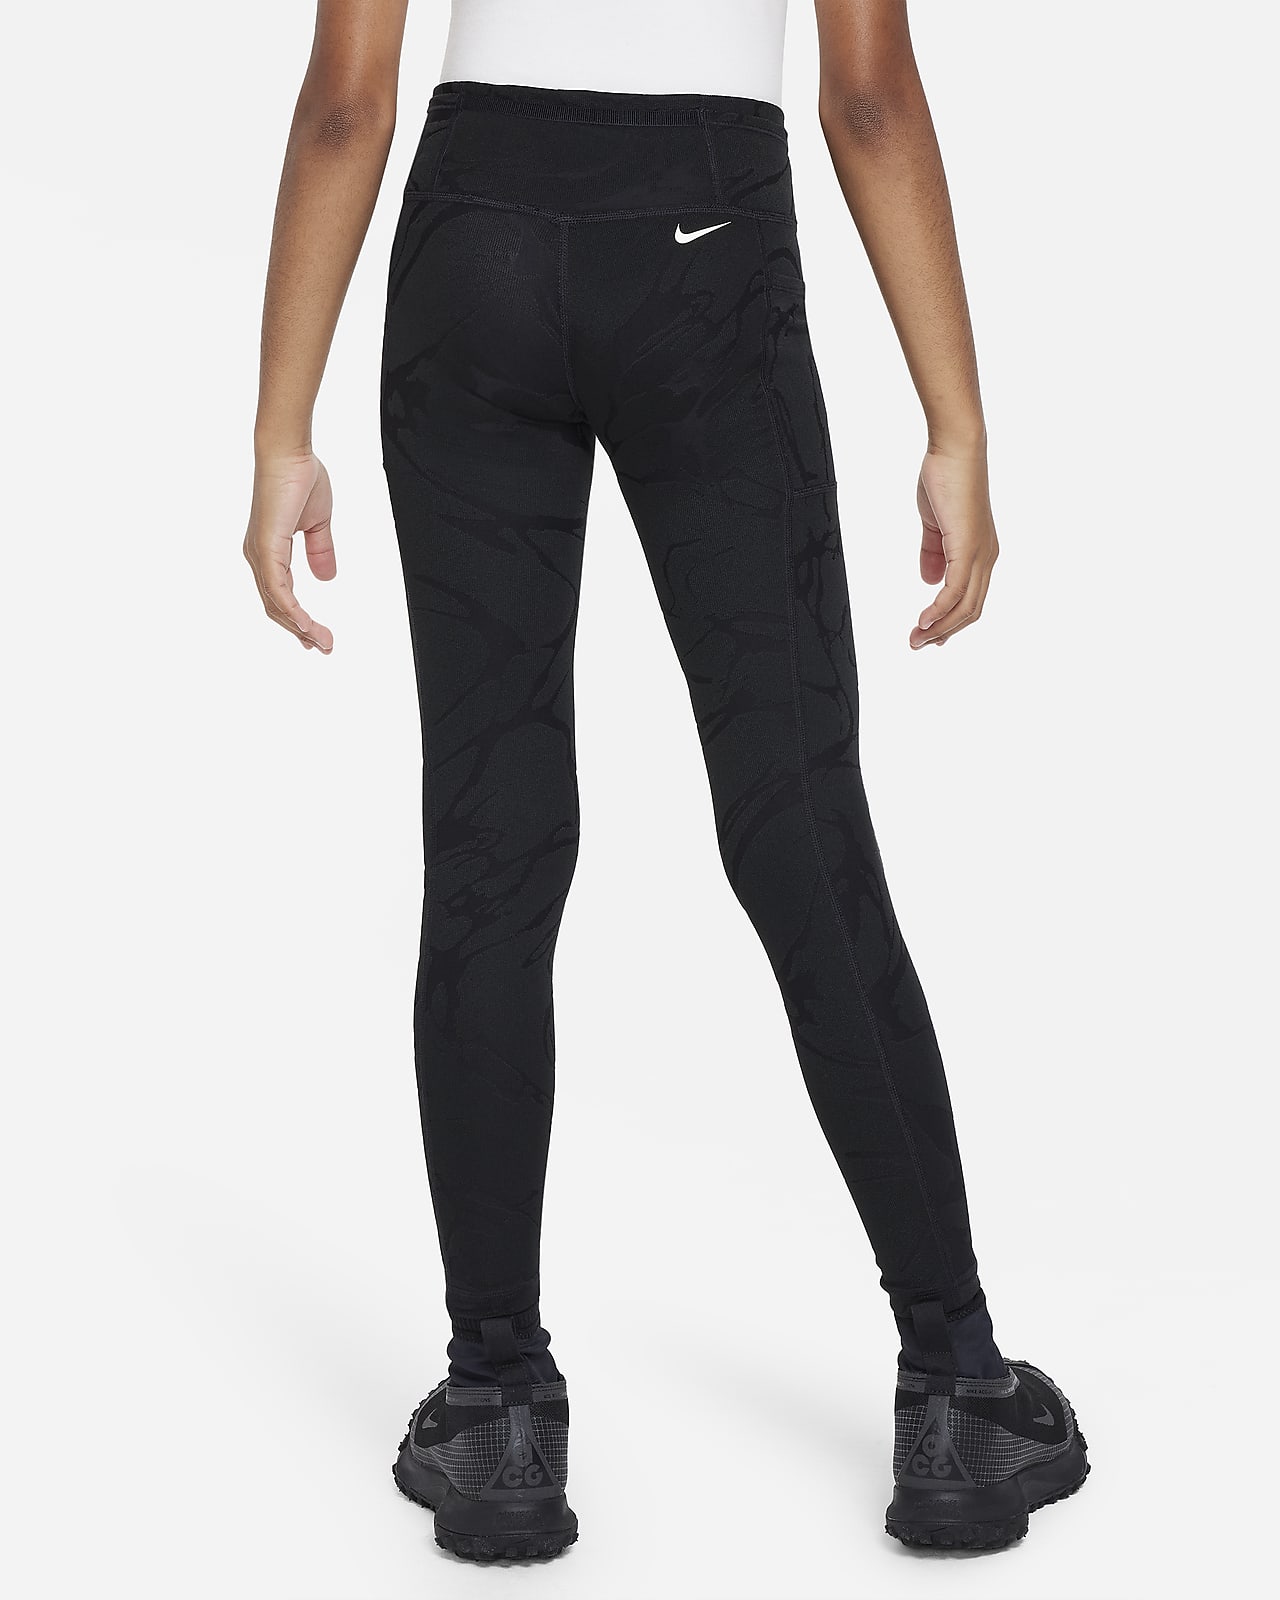 Green Pockets Volleyball Tights & Leggings. Nike CA